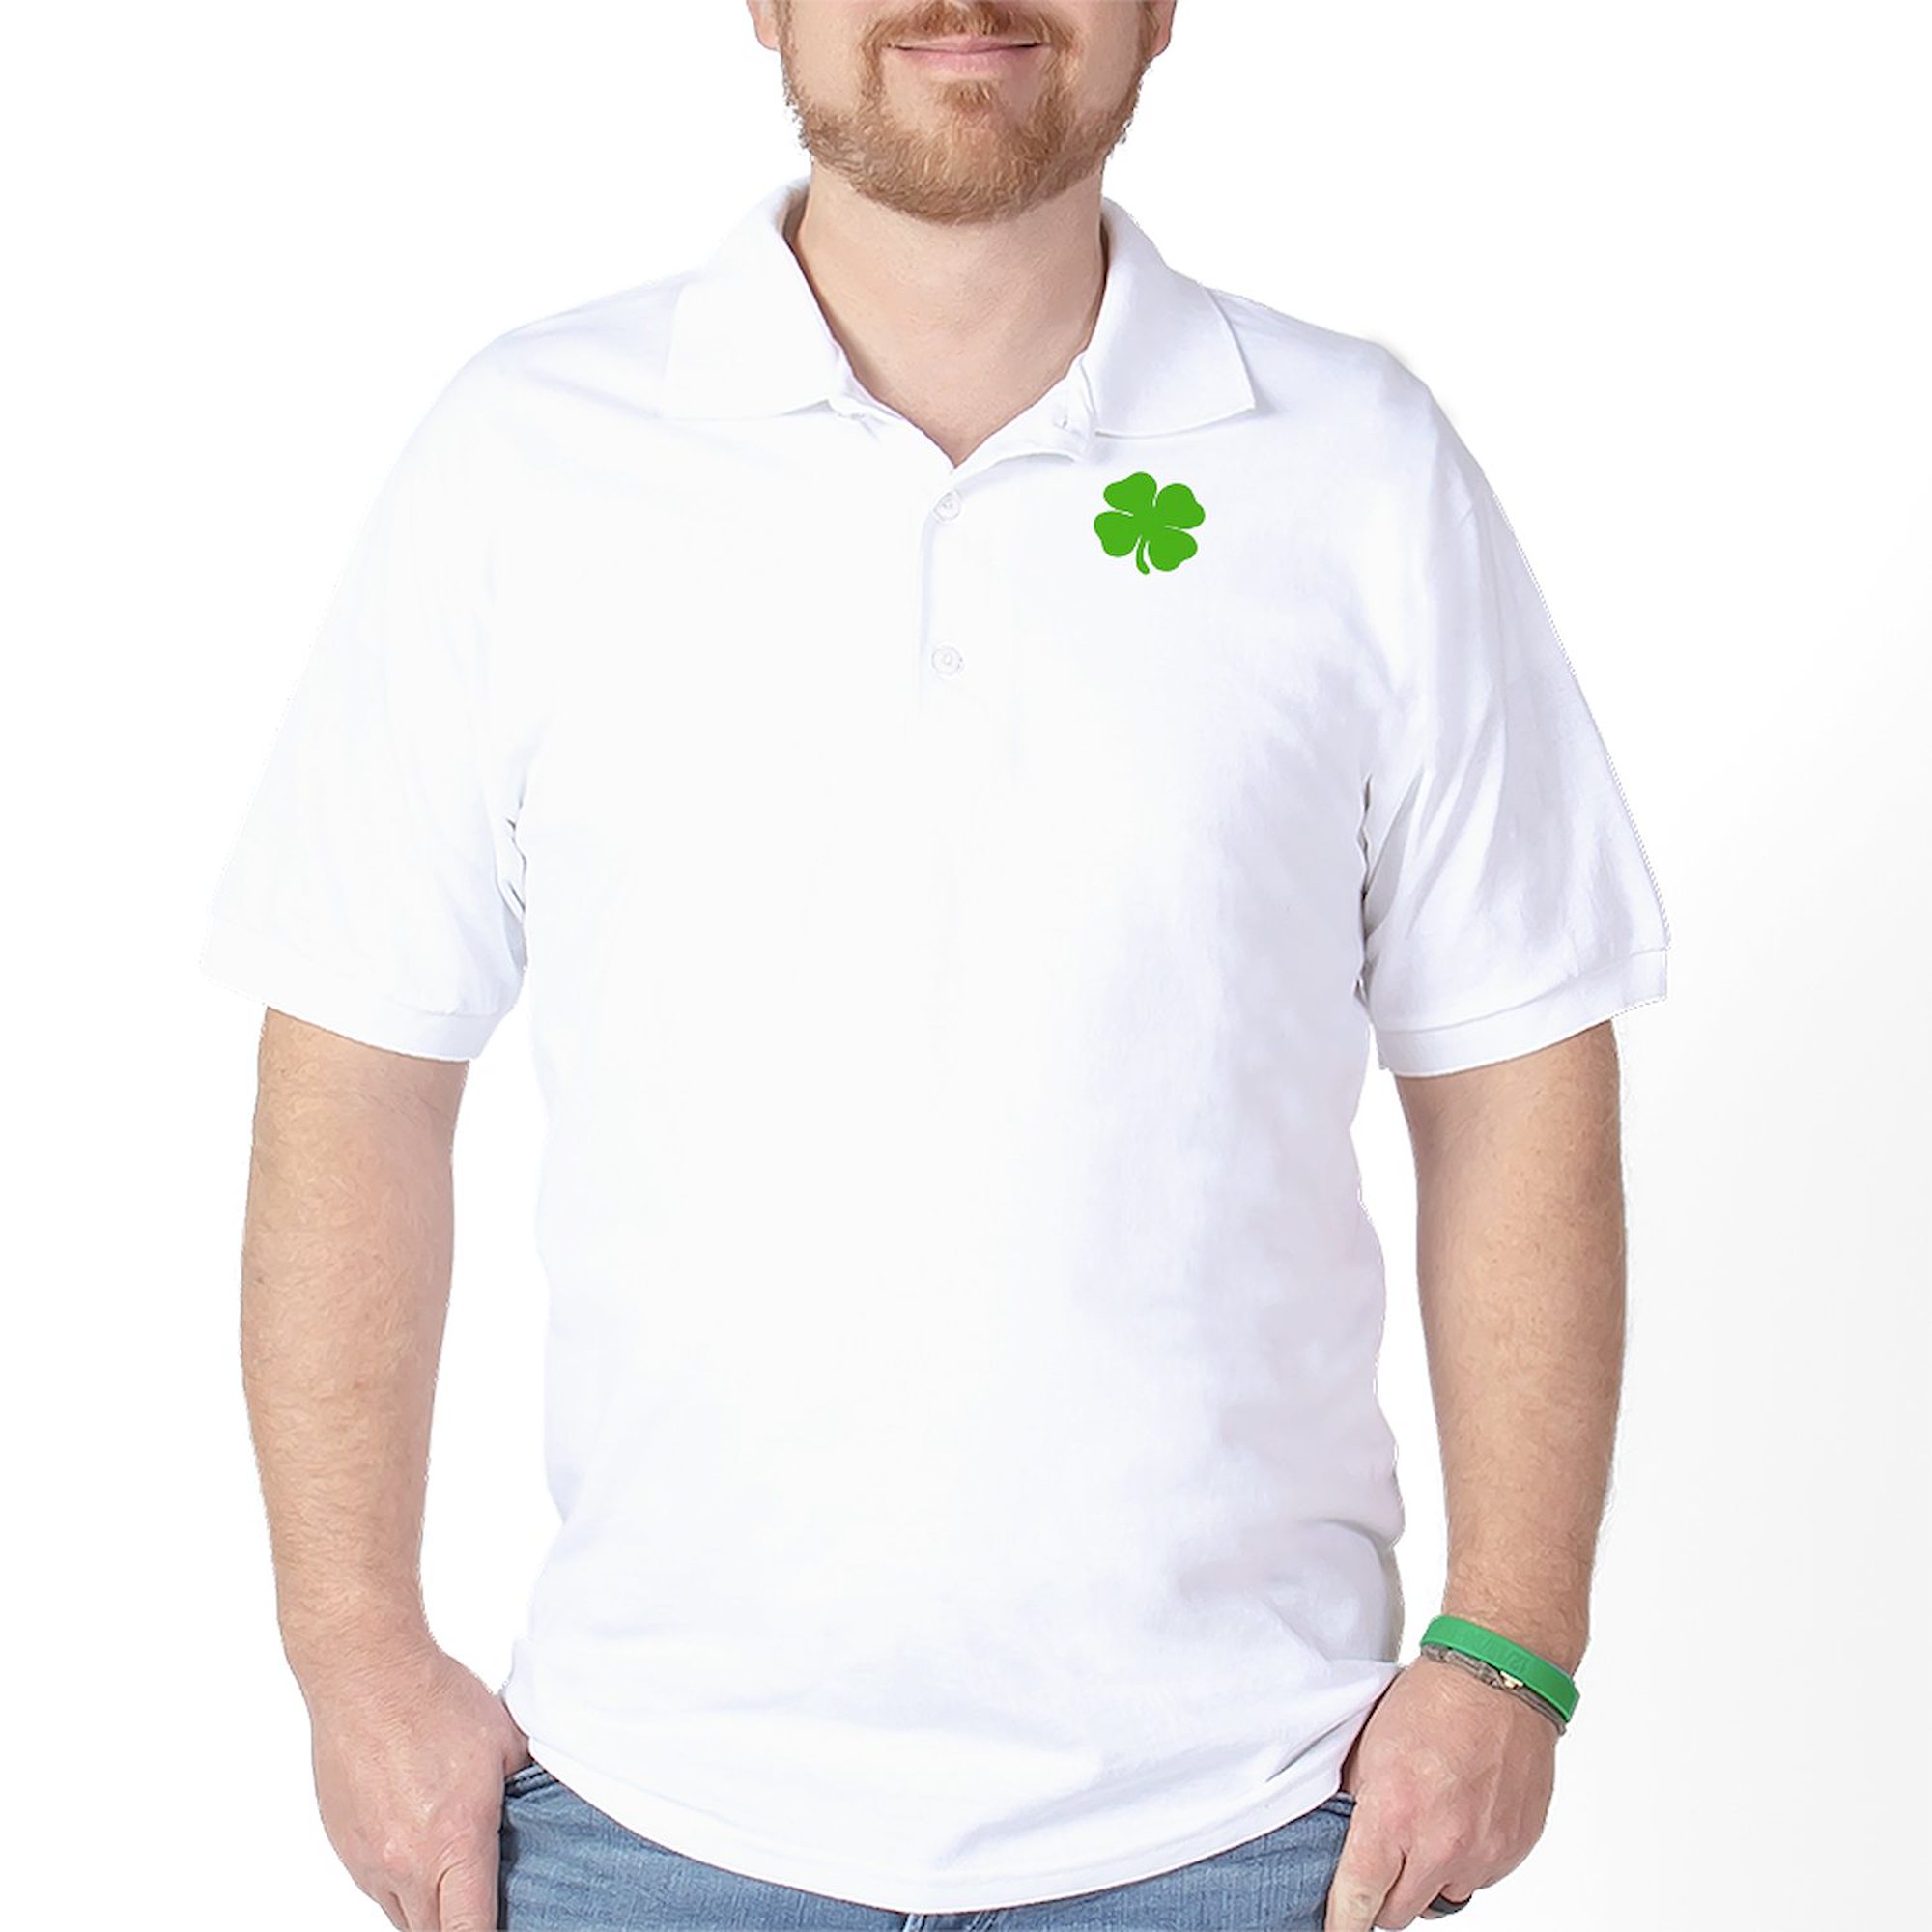 CafePress - St. Patrick's Day Shamrock Golf Shirt - Golf Shirt, Pique Knit Golf Polo - image 1 of 4